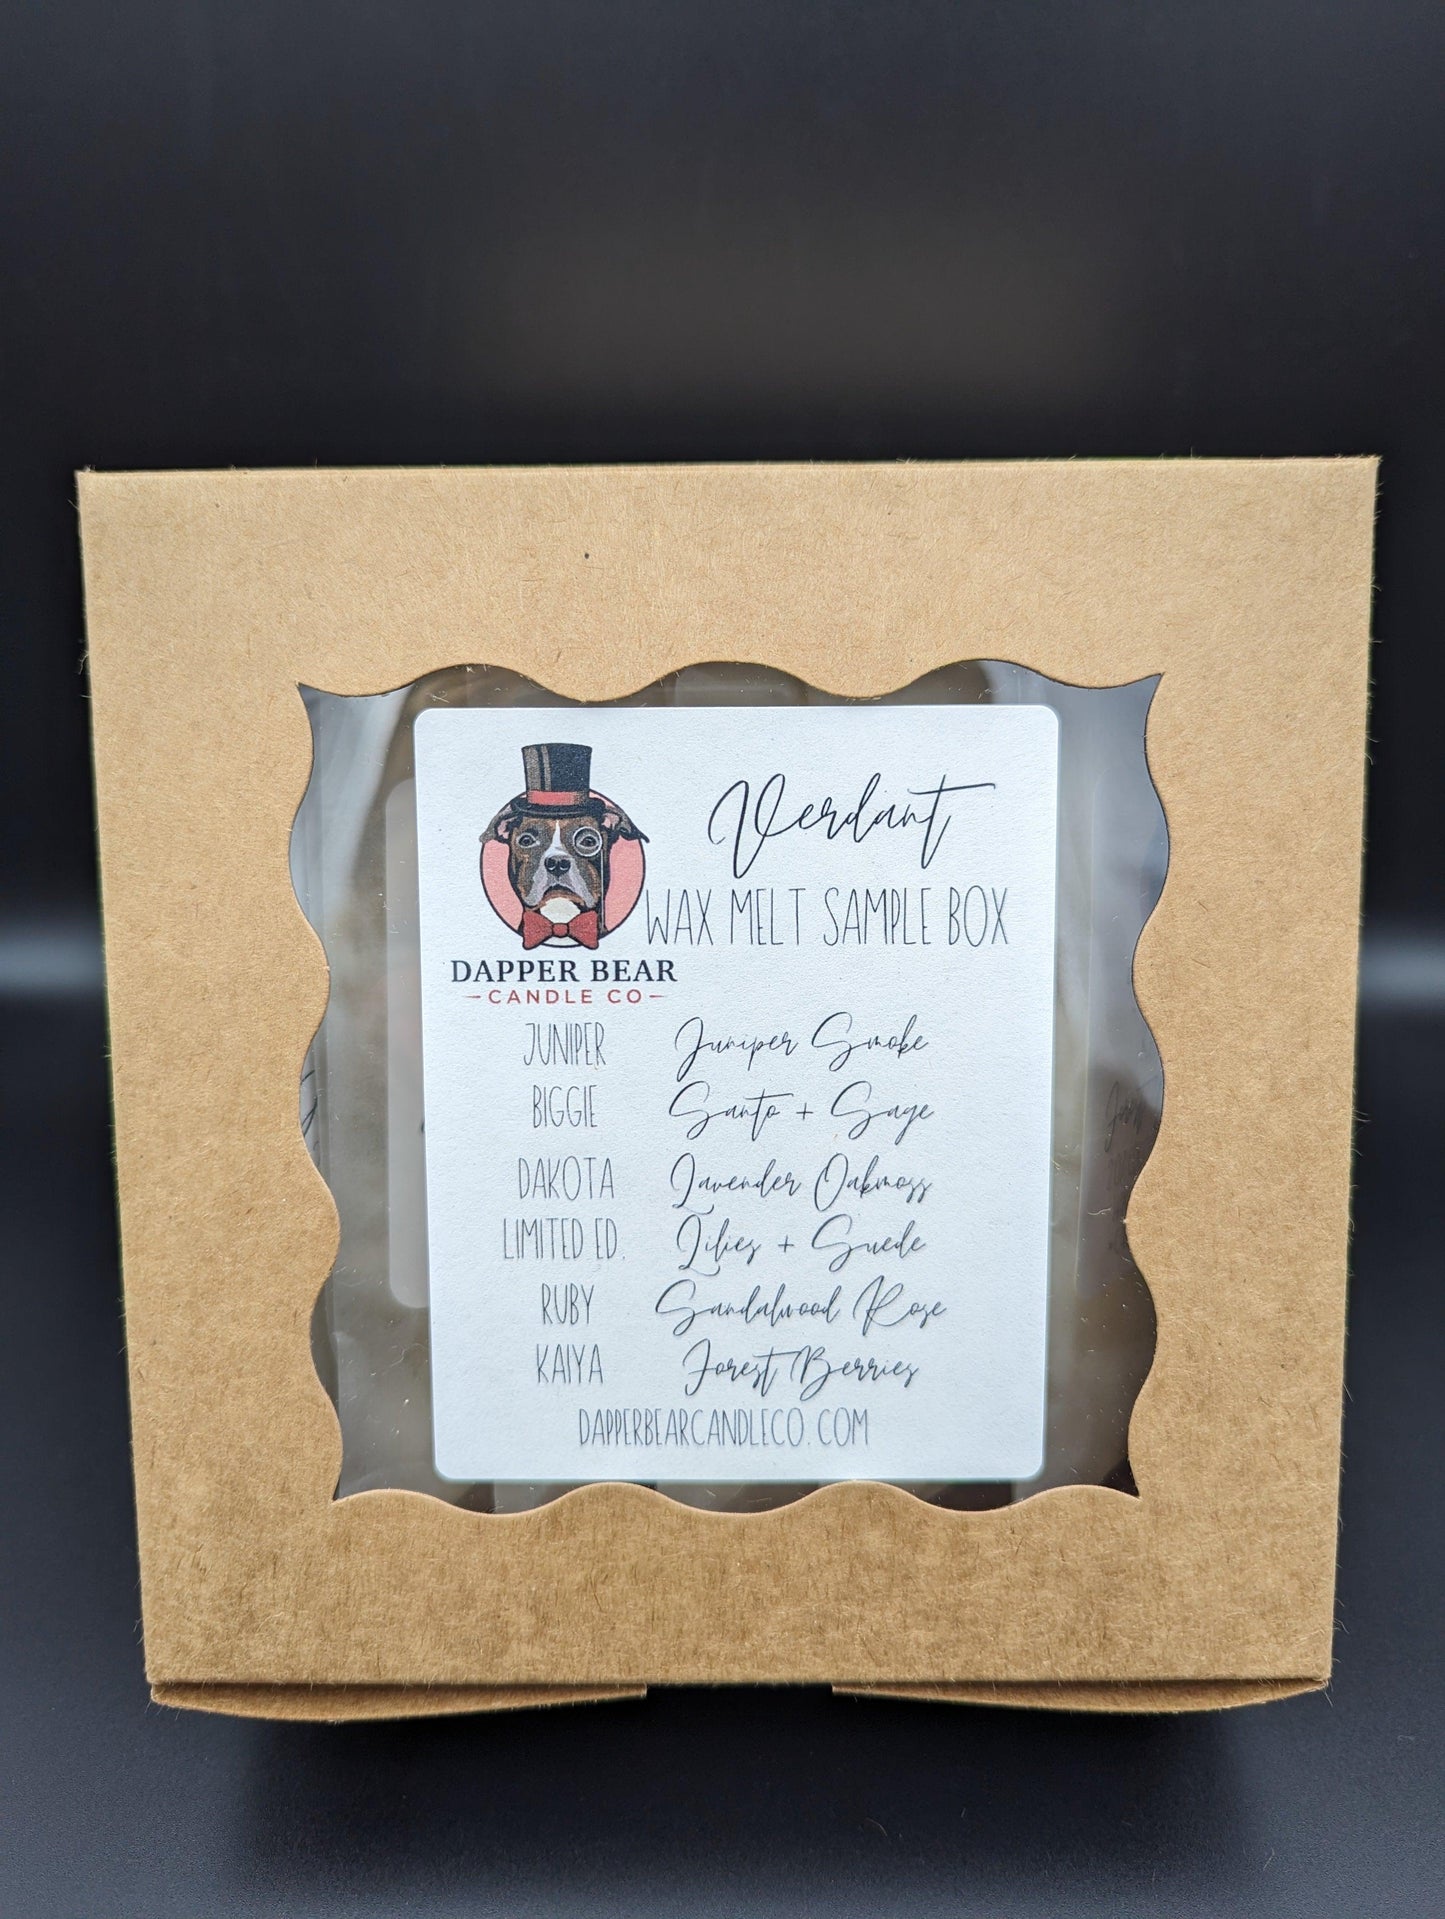 Verdant - Sample Box - Dapper Bear Candle Co.